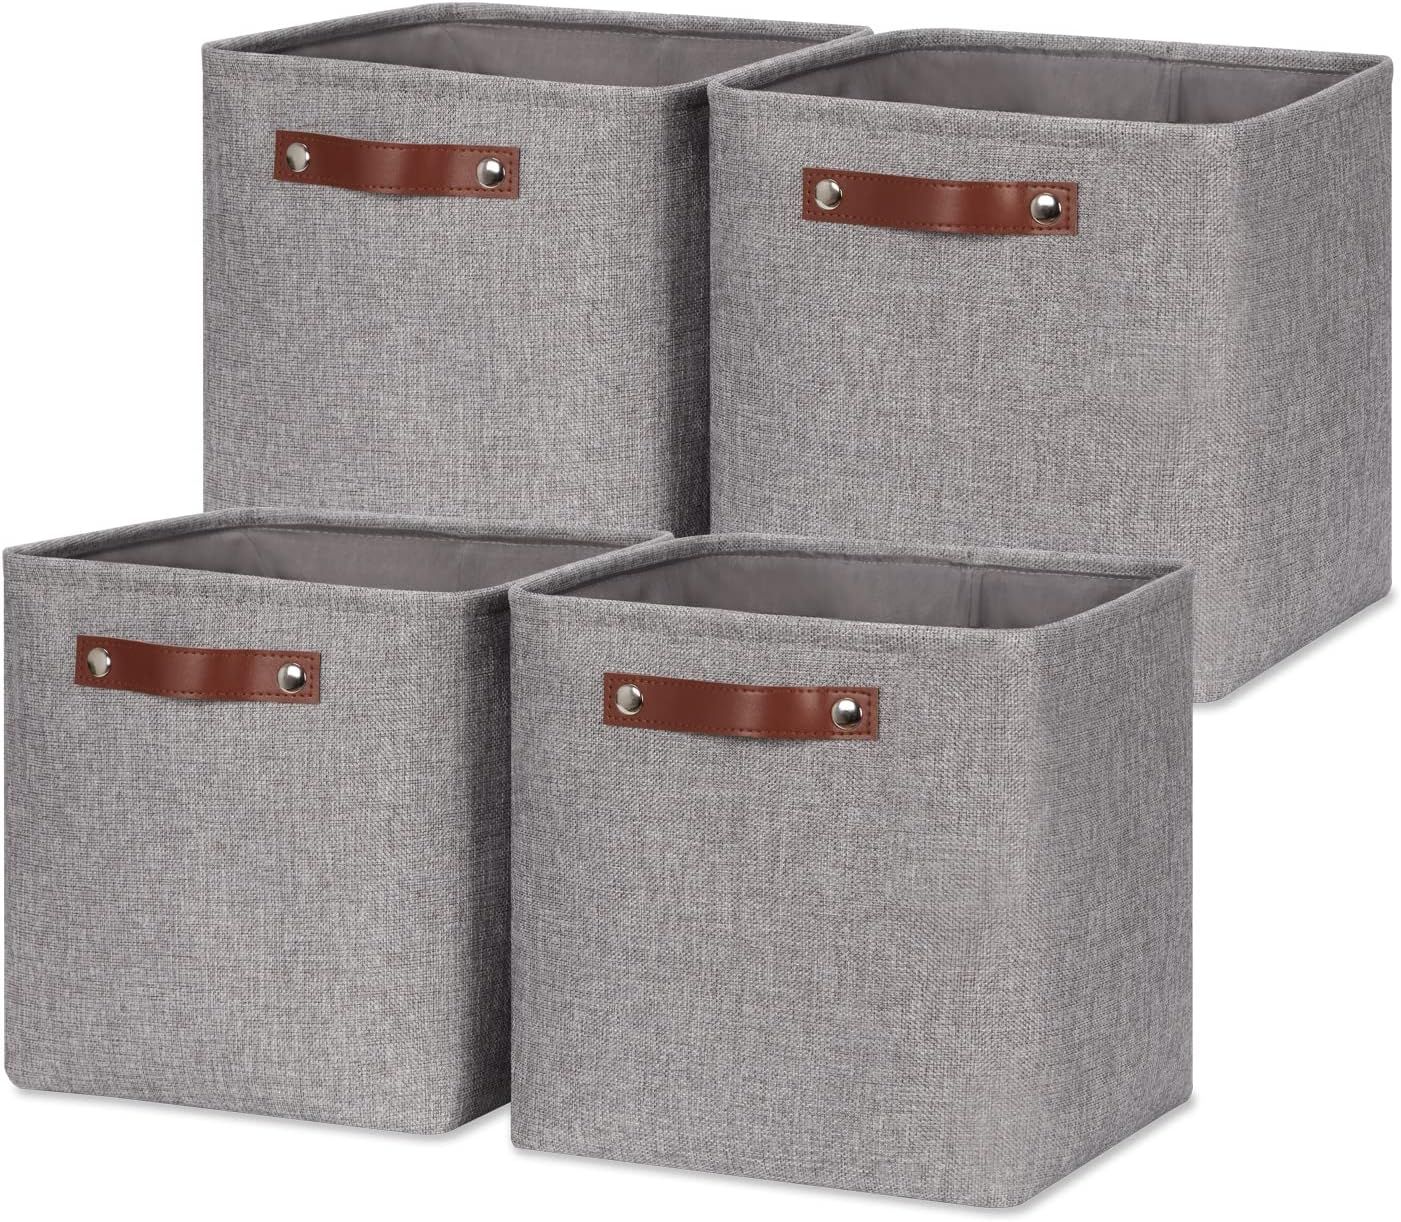 HNZIGE Collapsible Storage Basket,(4Pack)Cube Storage Baskets for Organizing Shelves,Fabric Baske... | Amazon (US)